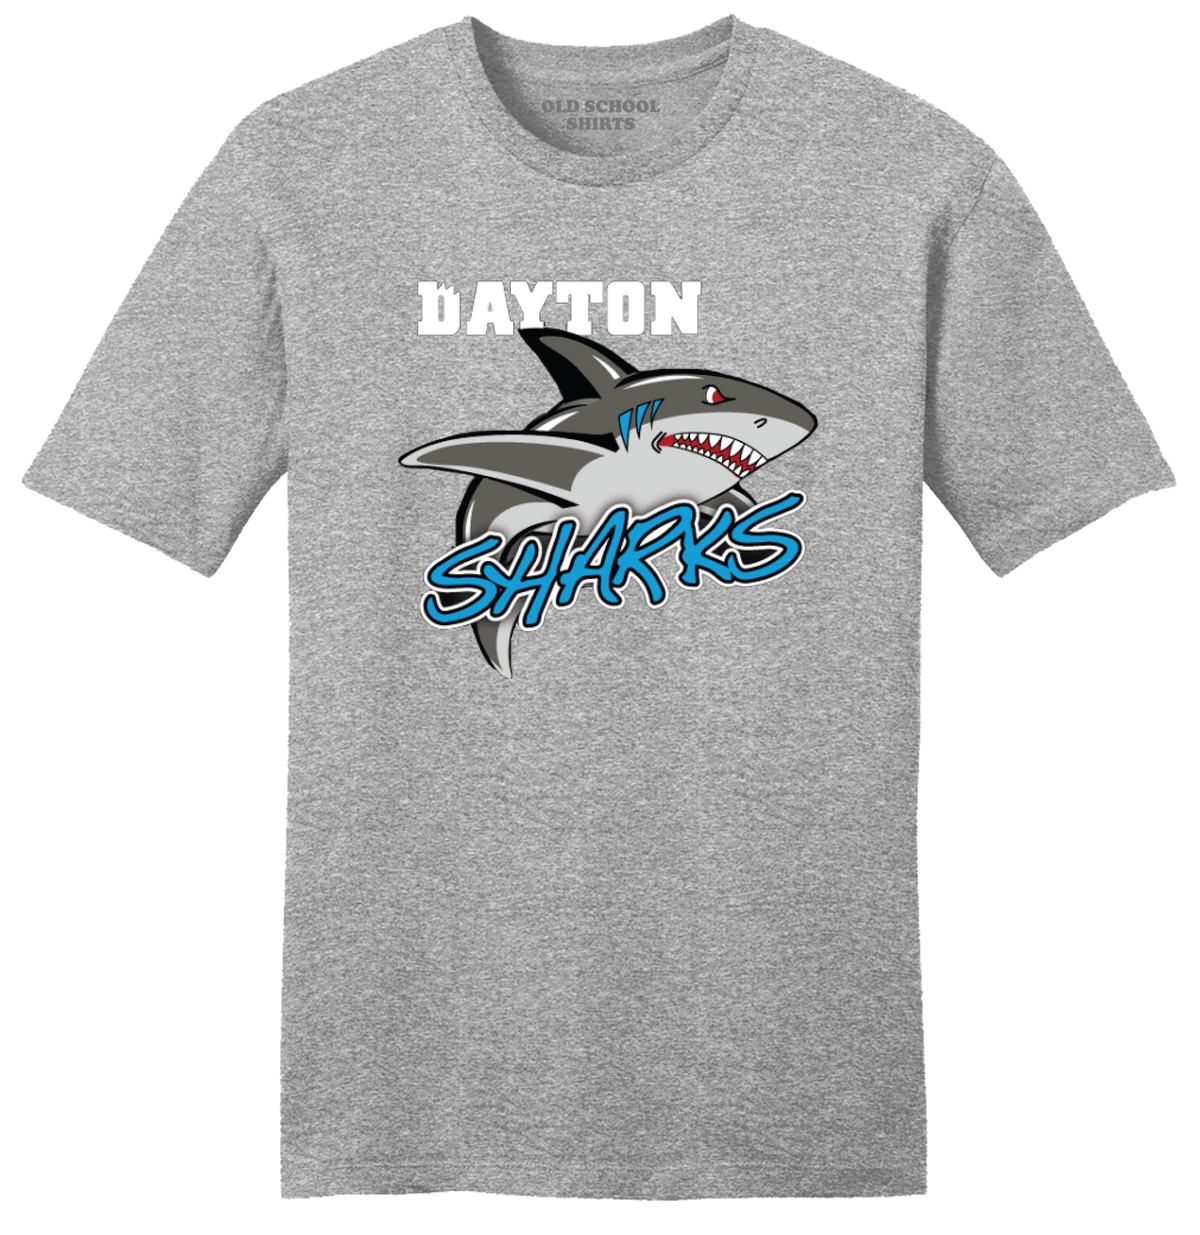 Dayton Sharks T-shirt